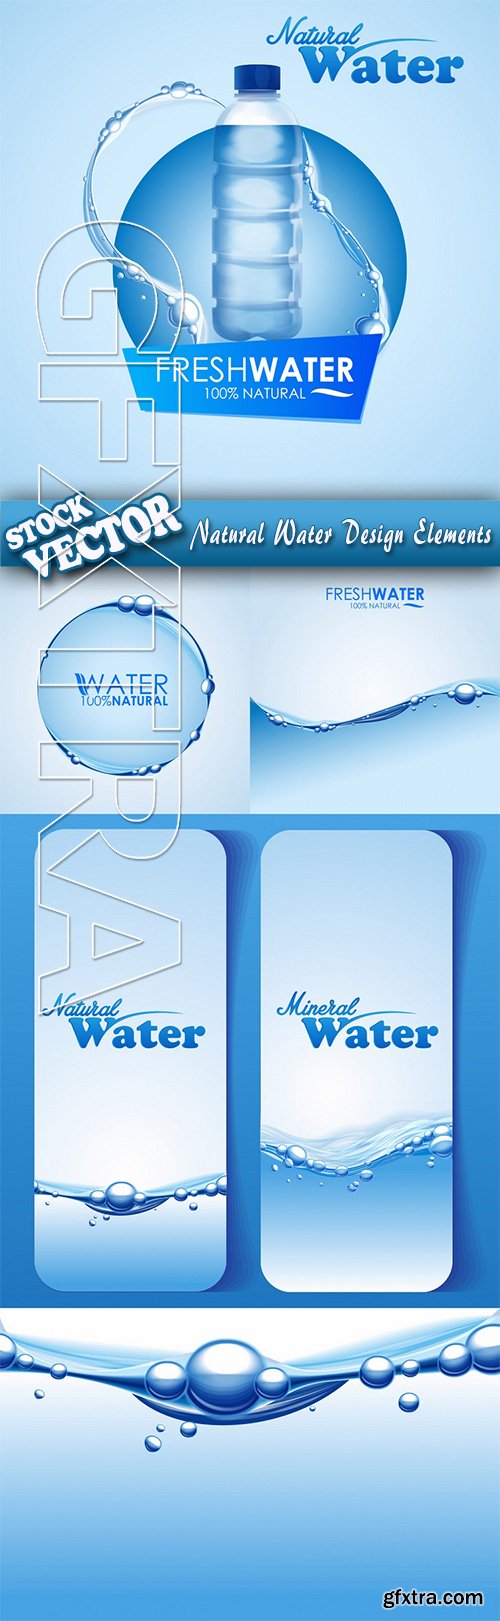 Stock Vector - Natural Water Design Elements